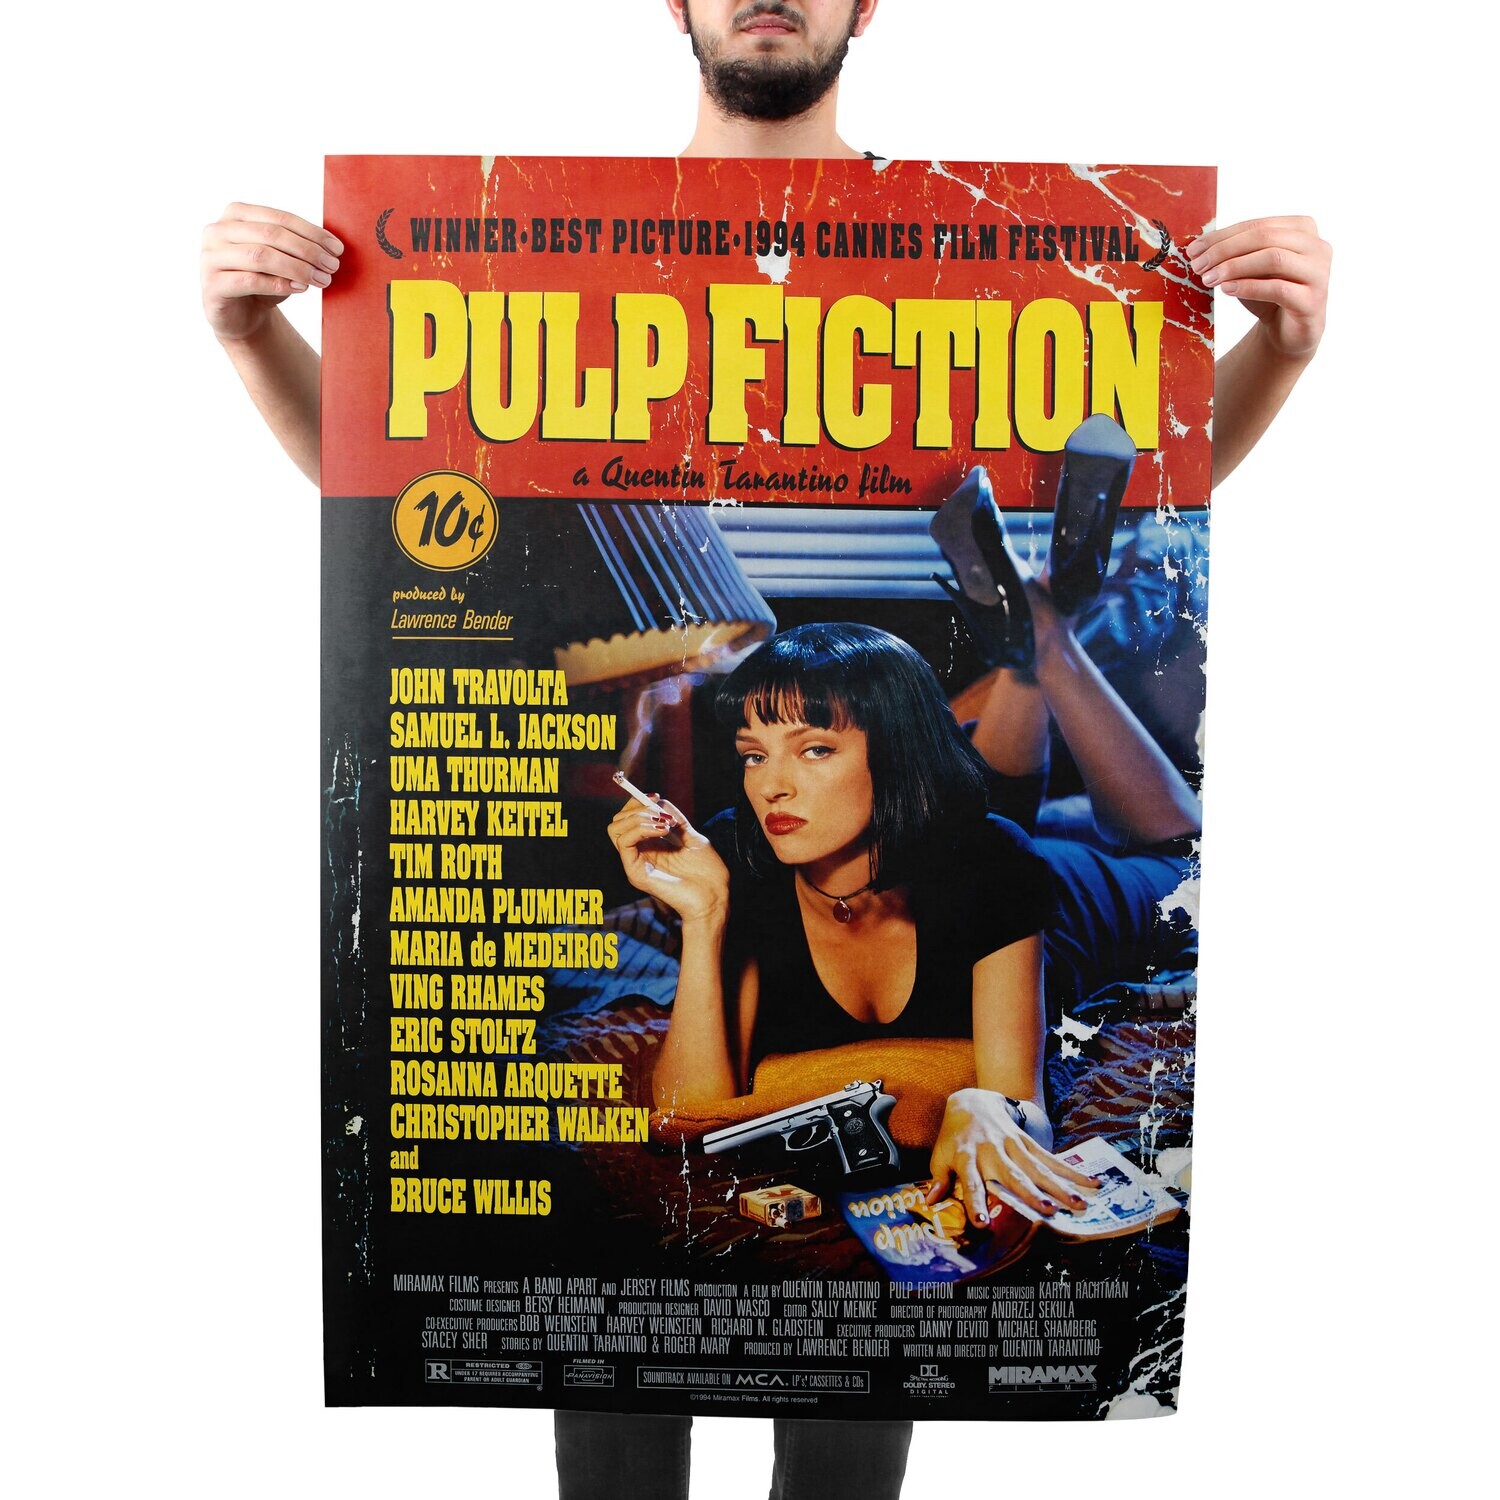 PULP FICTION Movie PHOTO Print POSTER Alternative Film Art Samuel L Jackson 004